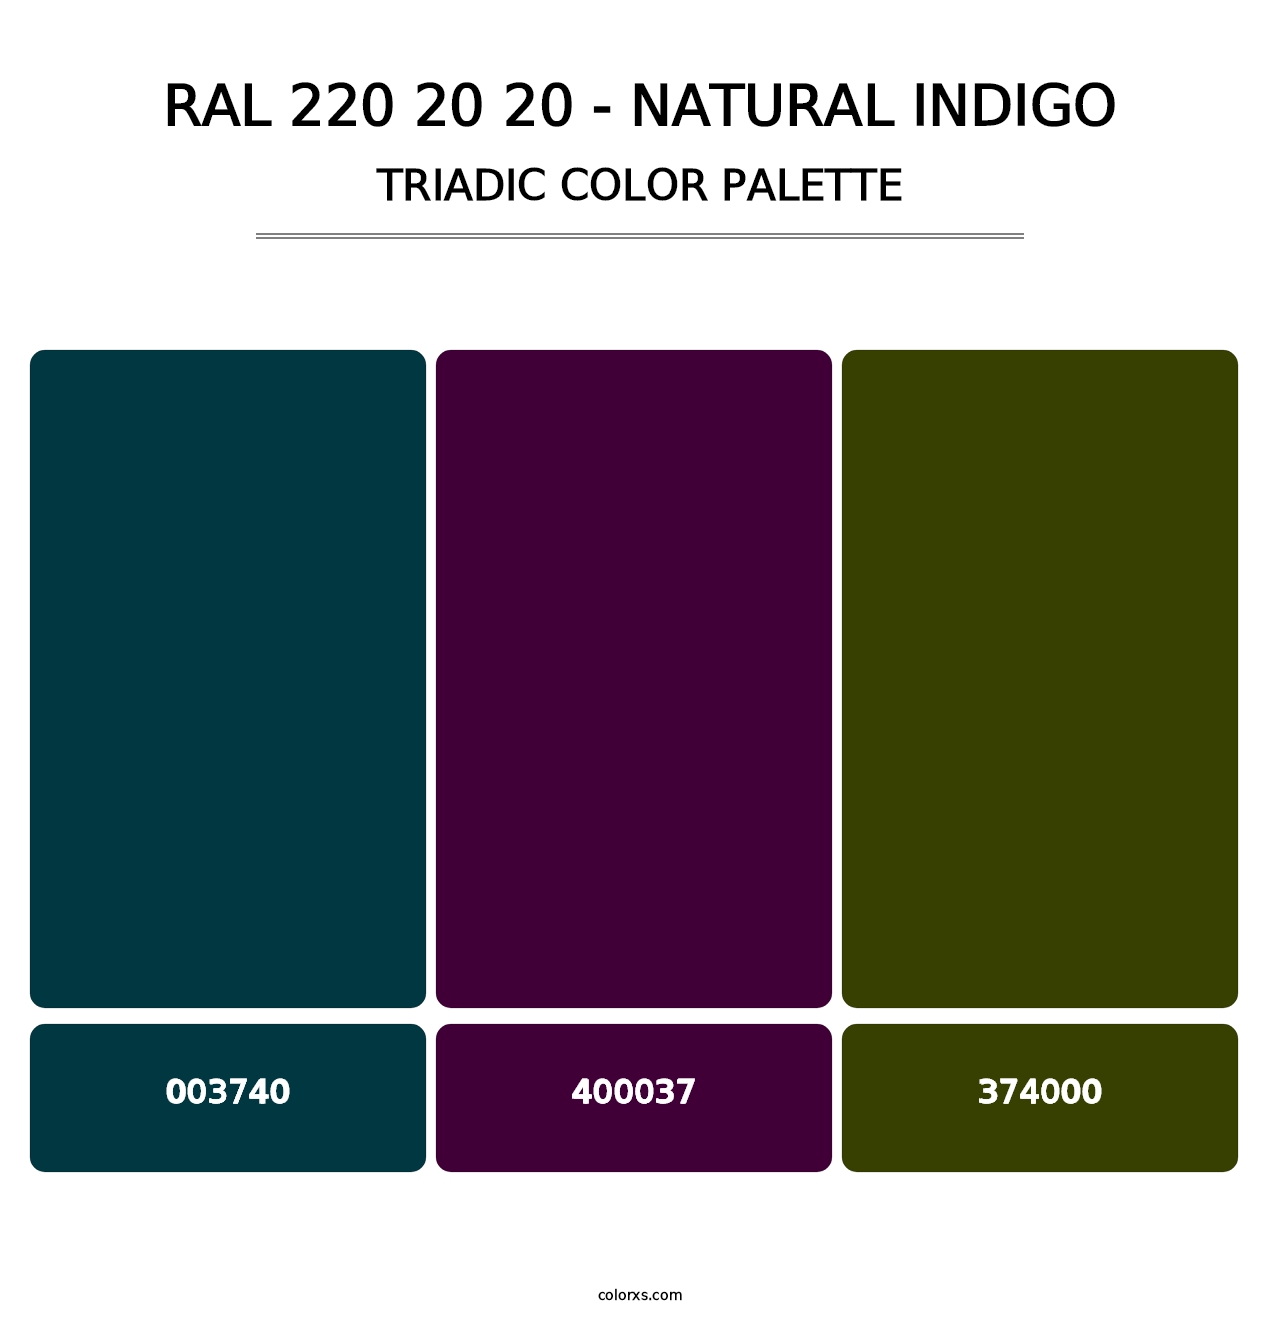 RAL 220 20 20 - Natural Indigo - Triadic Color Palette